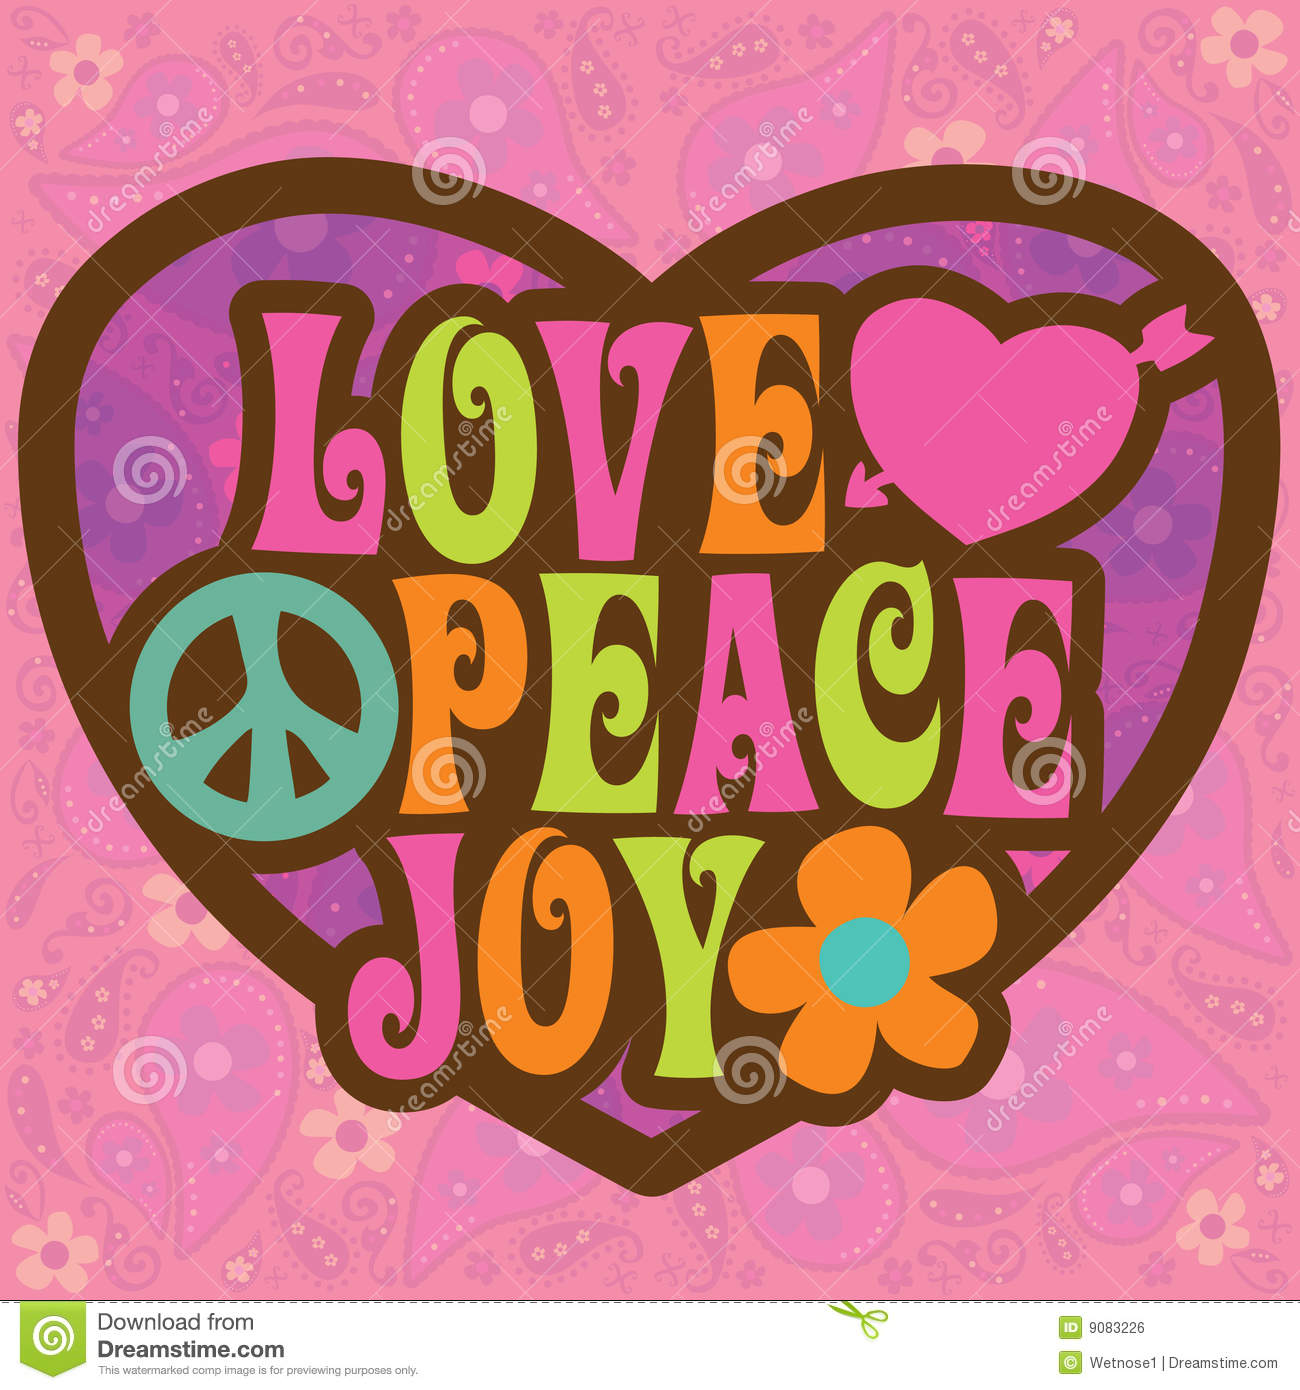 70s Love Peace Joy Illustration Royalty Free Stock Image   Image